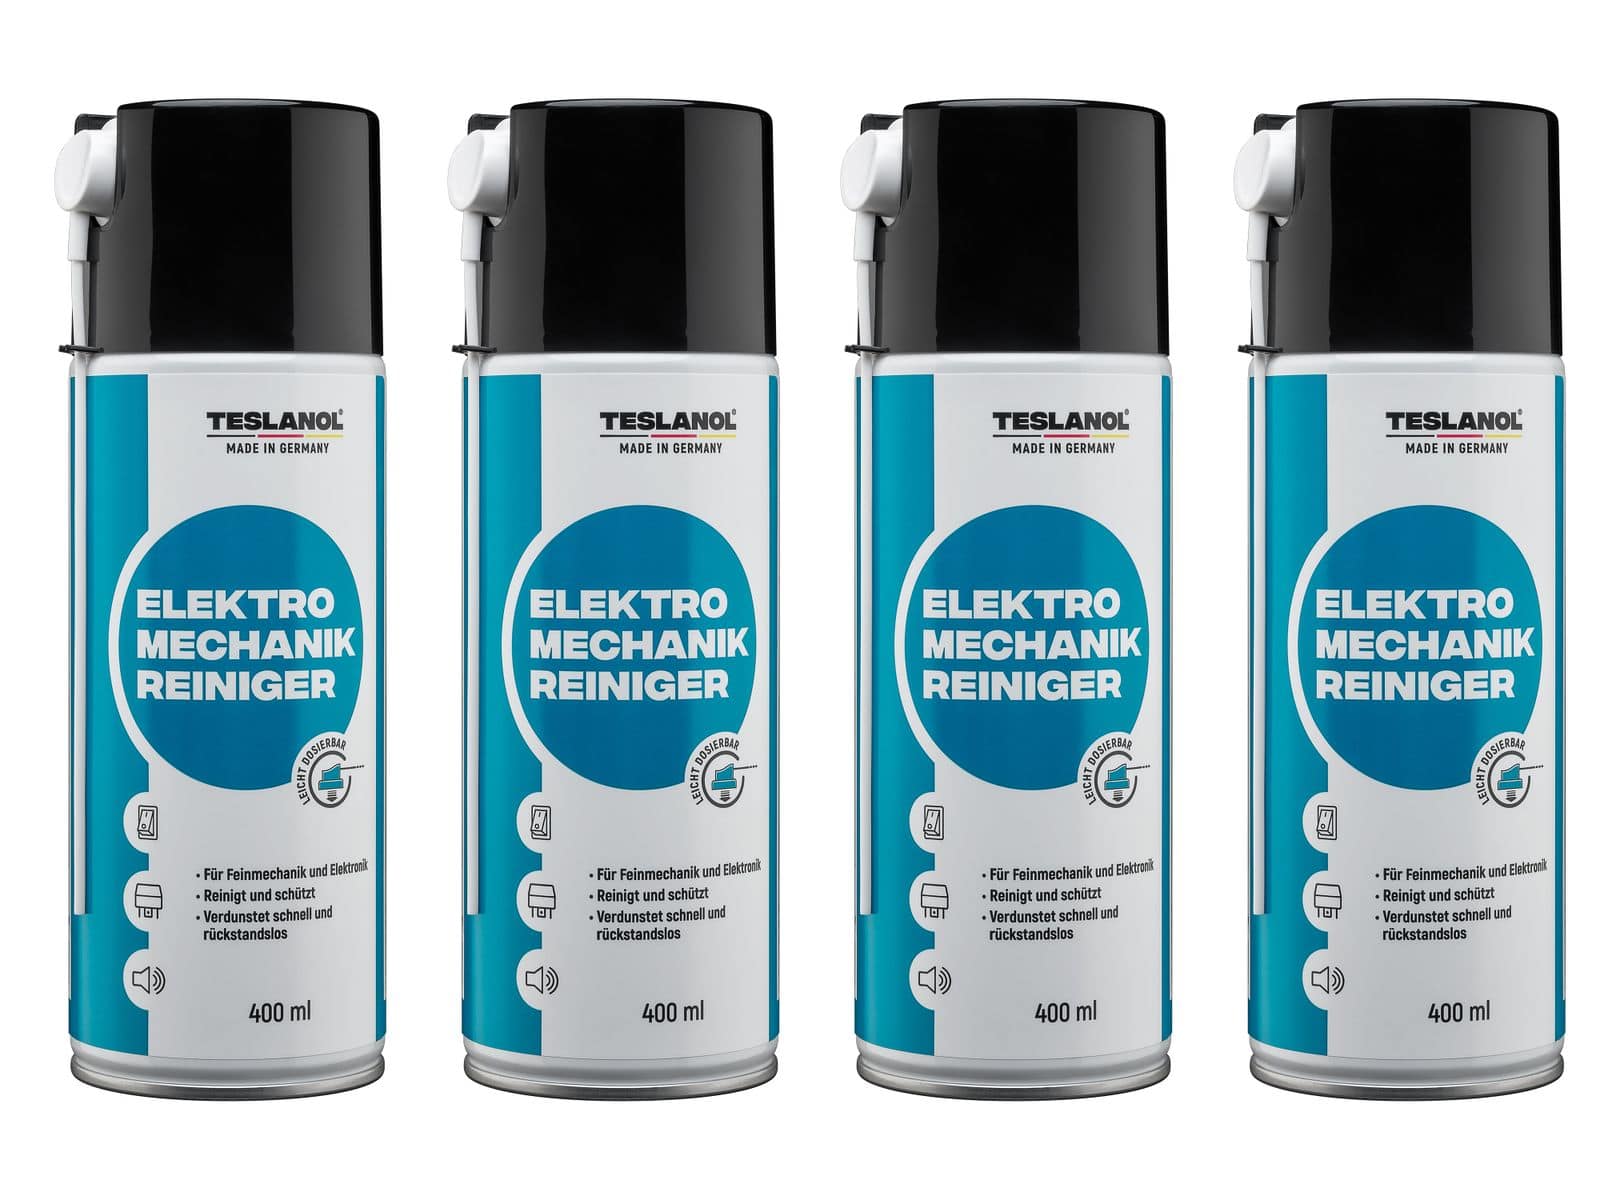 TESLANOL 26018 Elektro-Mechanik-Reinigerspray, 400 ml, 4 Stück von Teslanol